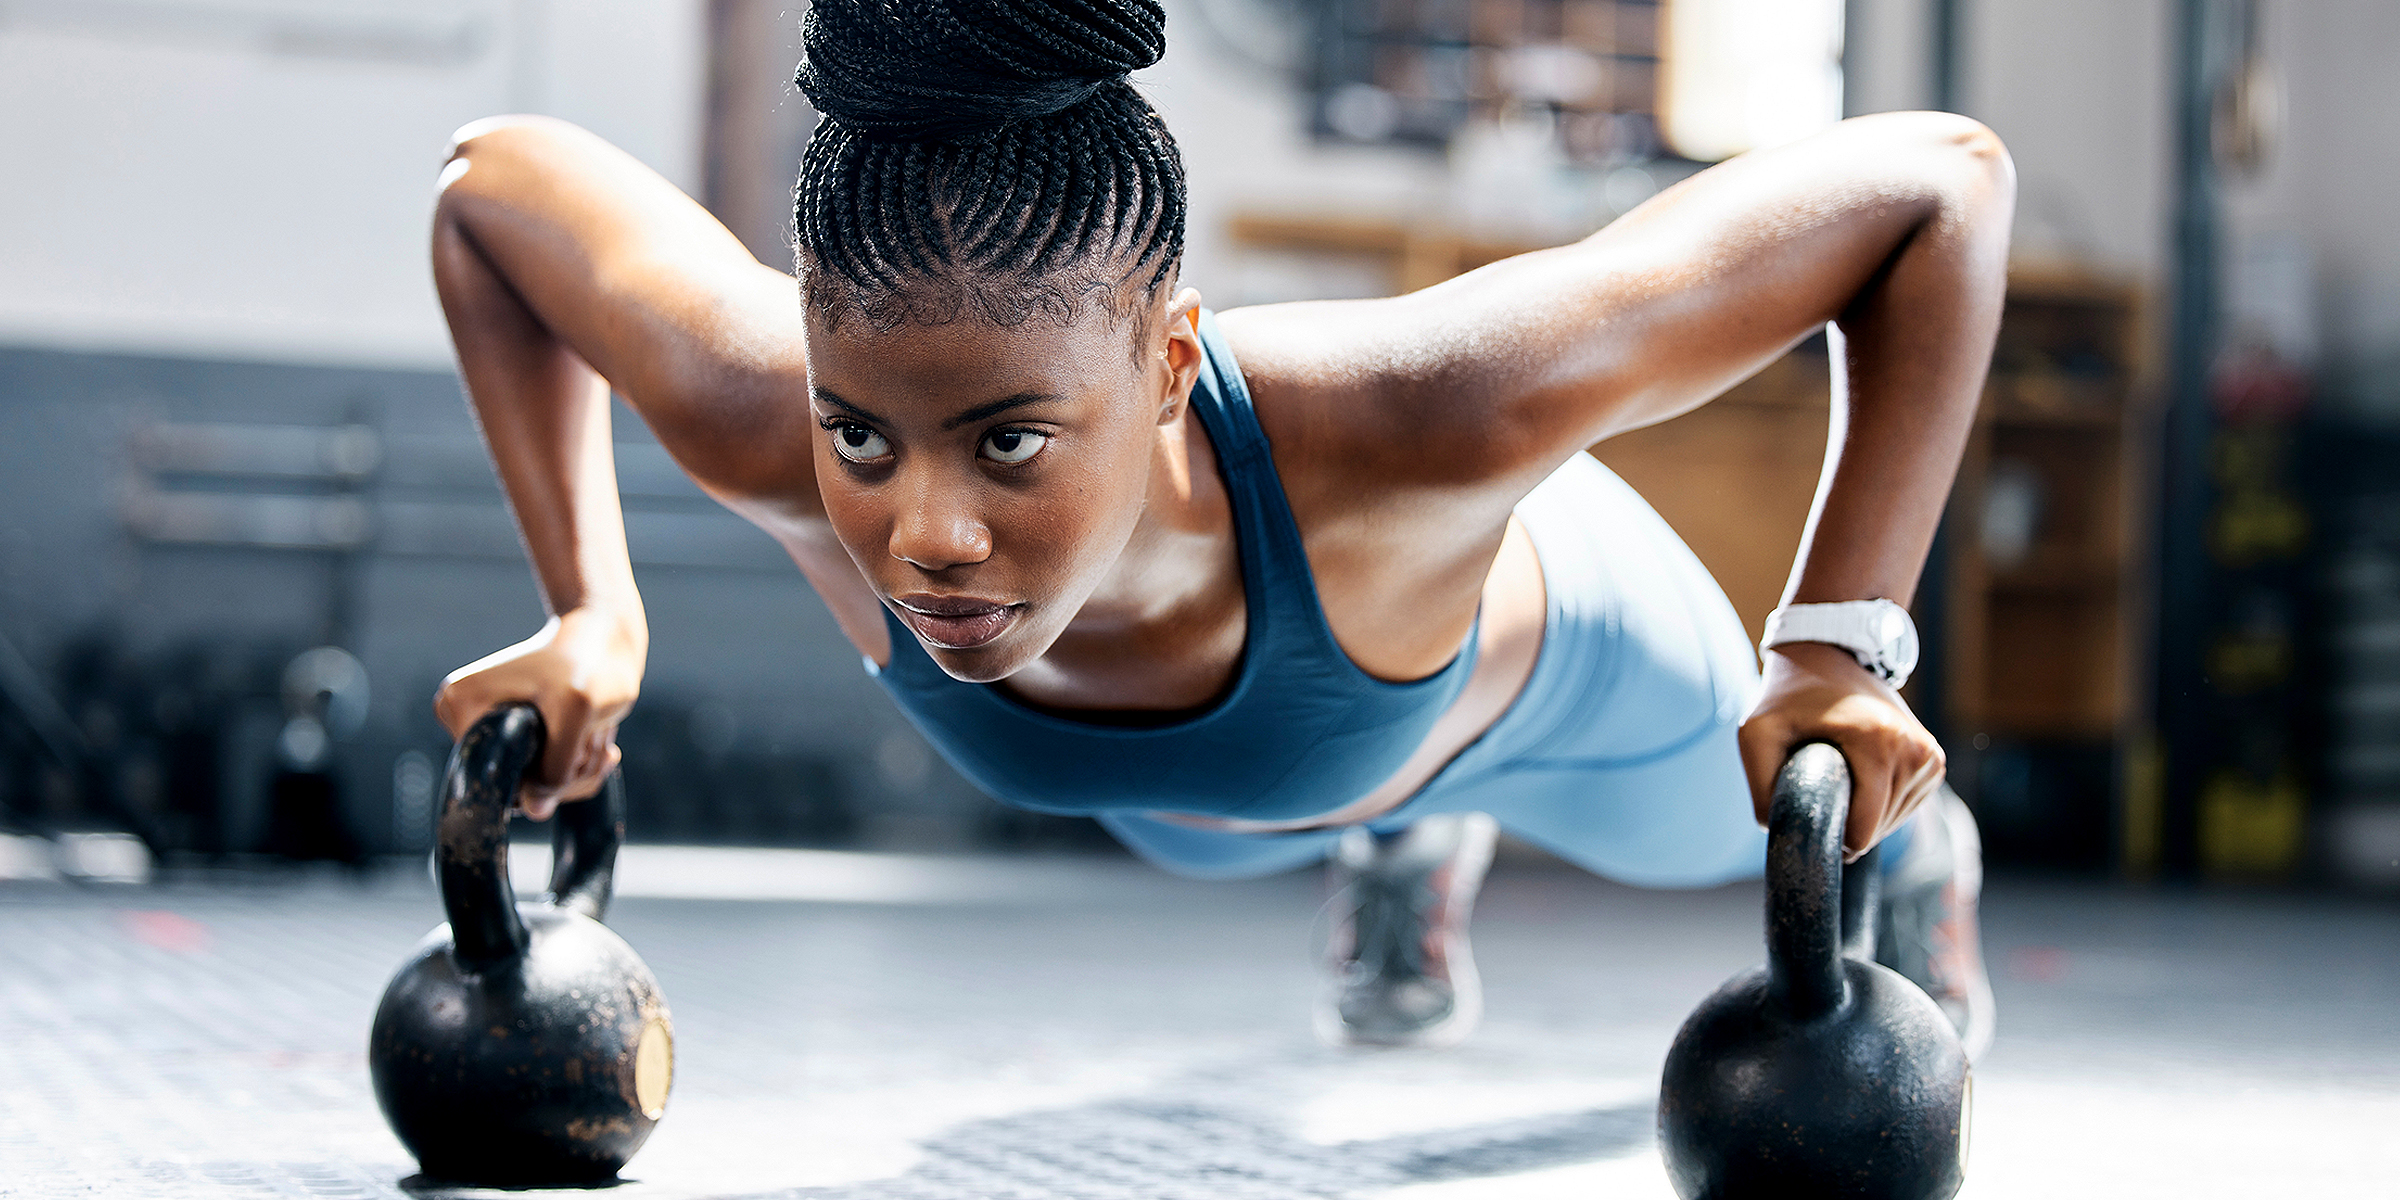 A woman using kettlebells in her workout | Source: Shutterstock